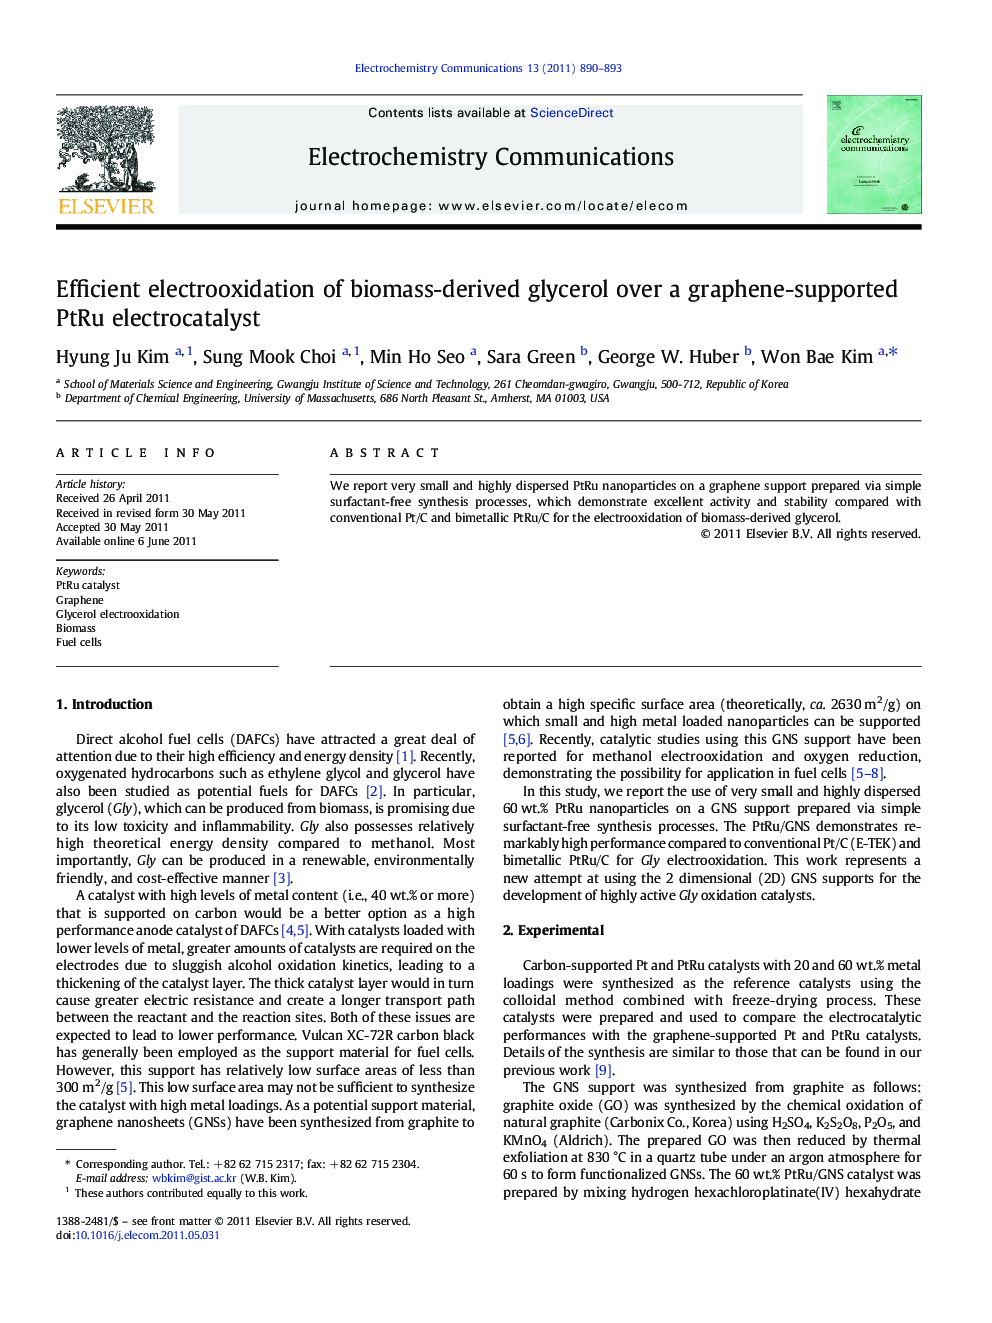 Efficient electrooxidation of biomass-derived glycerol over a graphene-supported PtRu electrocatalyst